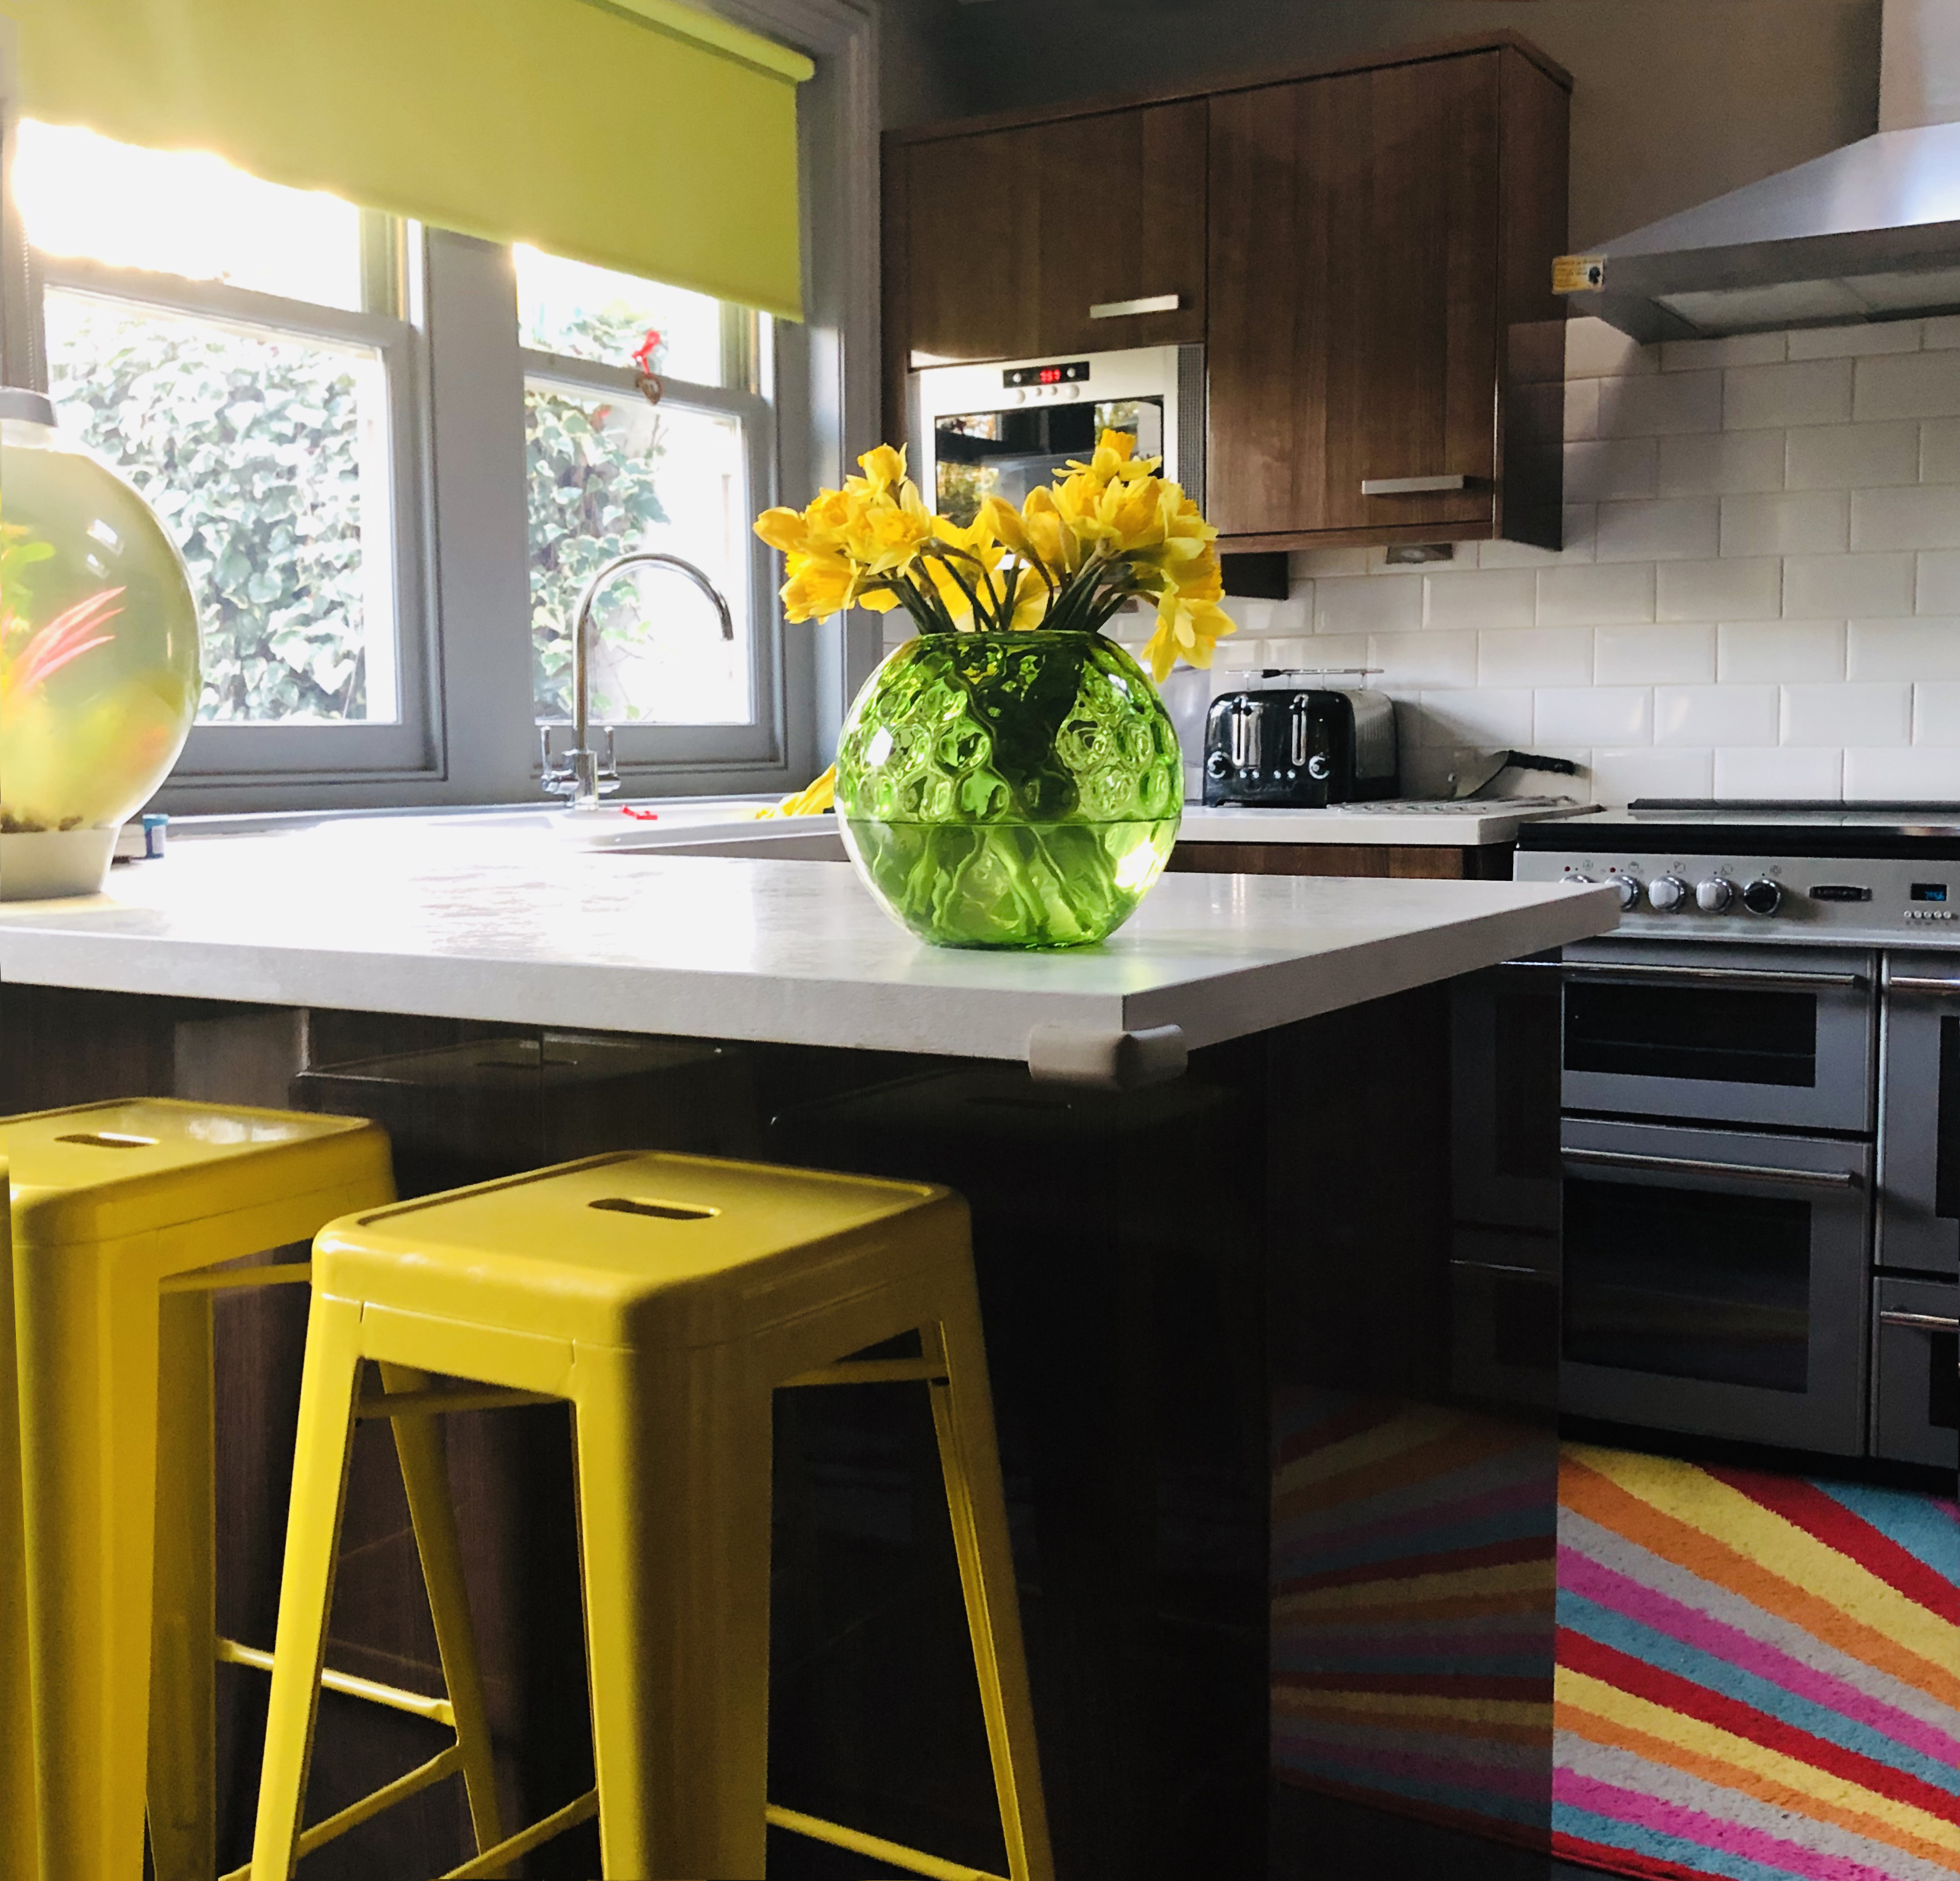 https://www.houselogic.com/wp-content/uploads/2019/05/kitchen-countertops-yellow-accents.jpg